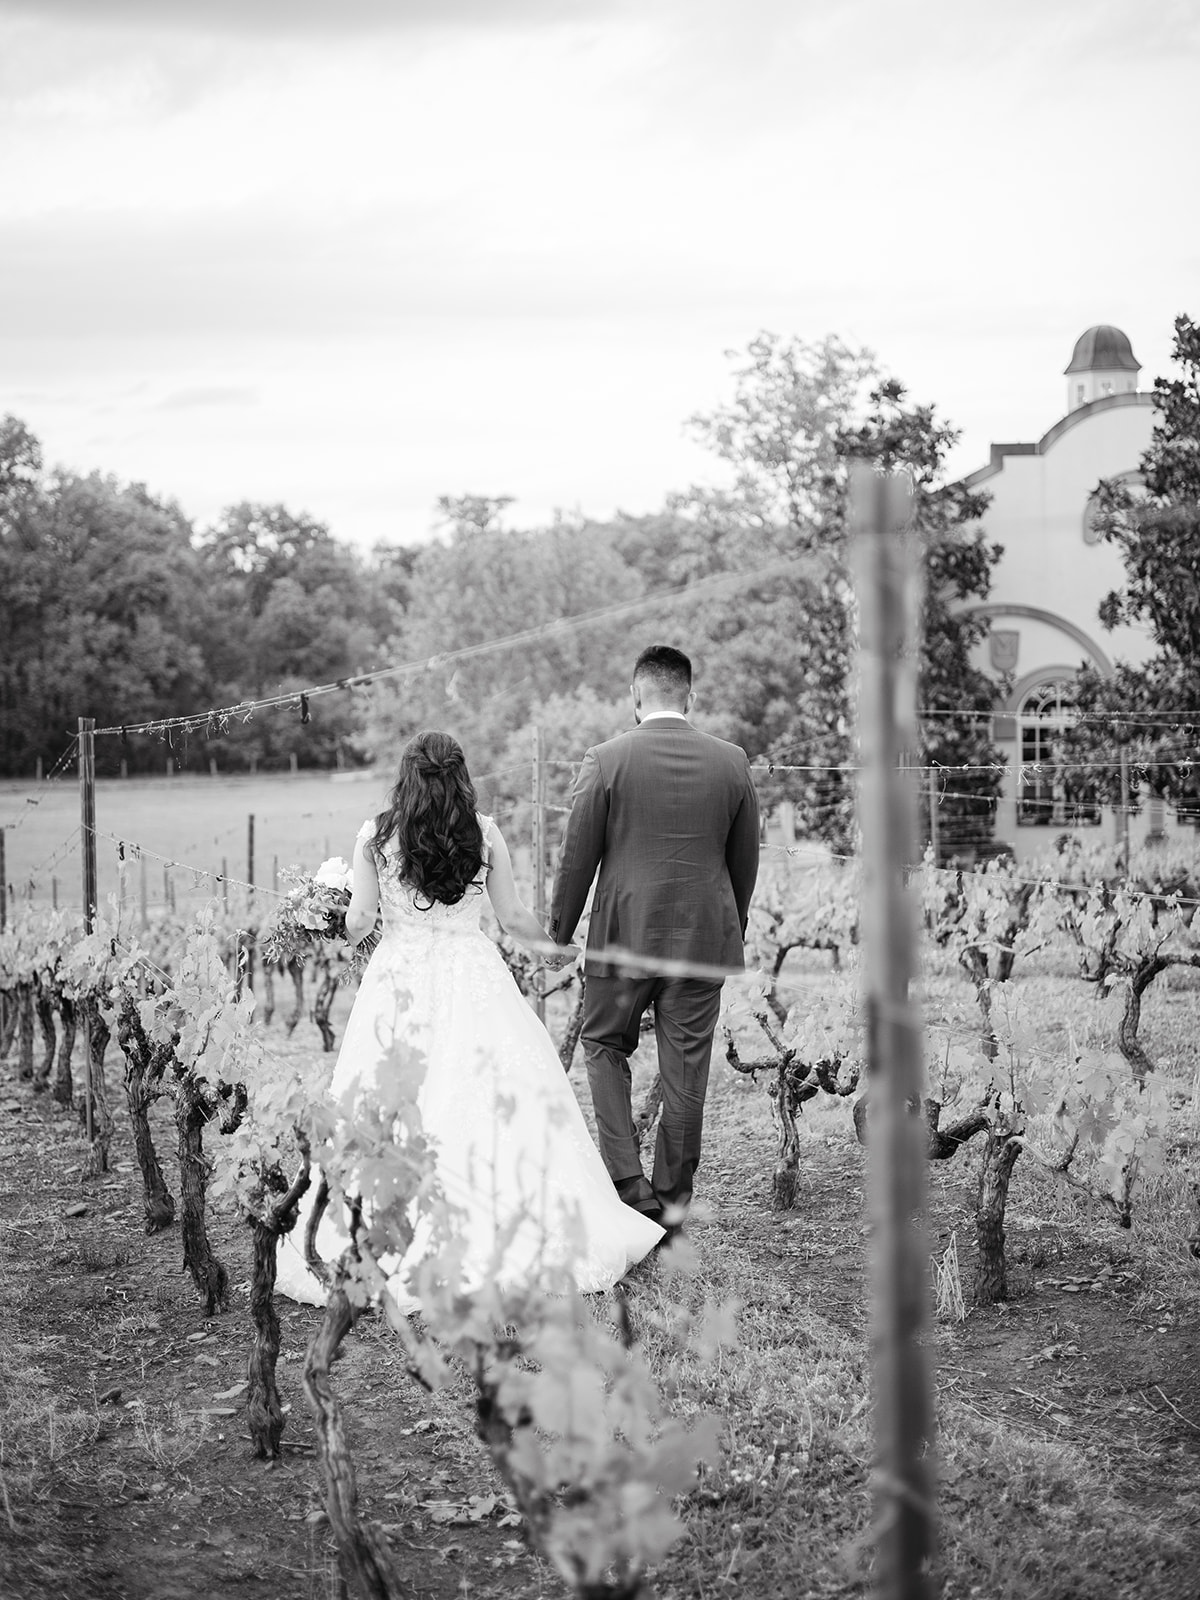 morais vineyard winery virginia bealeton wedding vineyard wedding photos just married initimate walking together couples